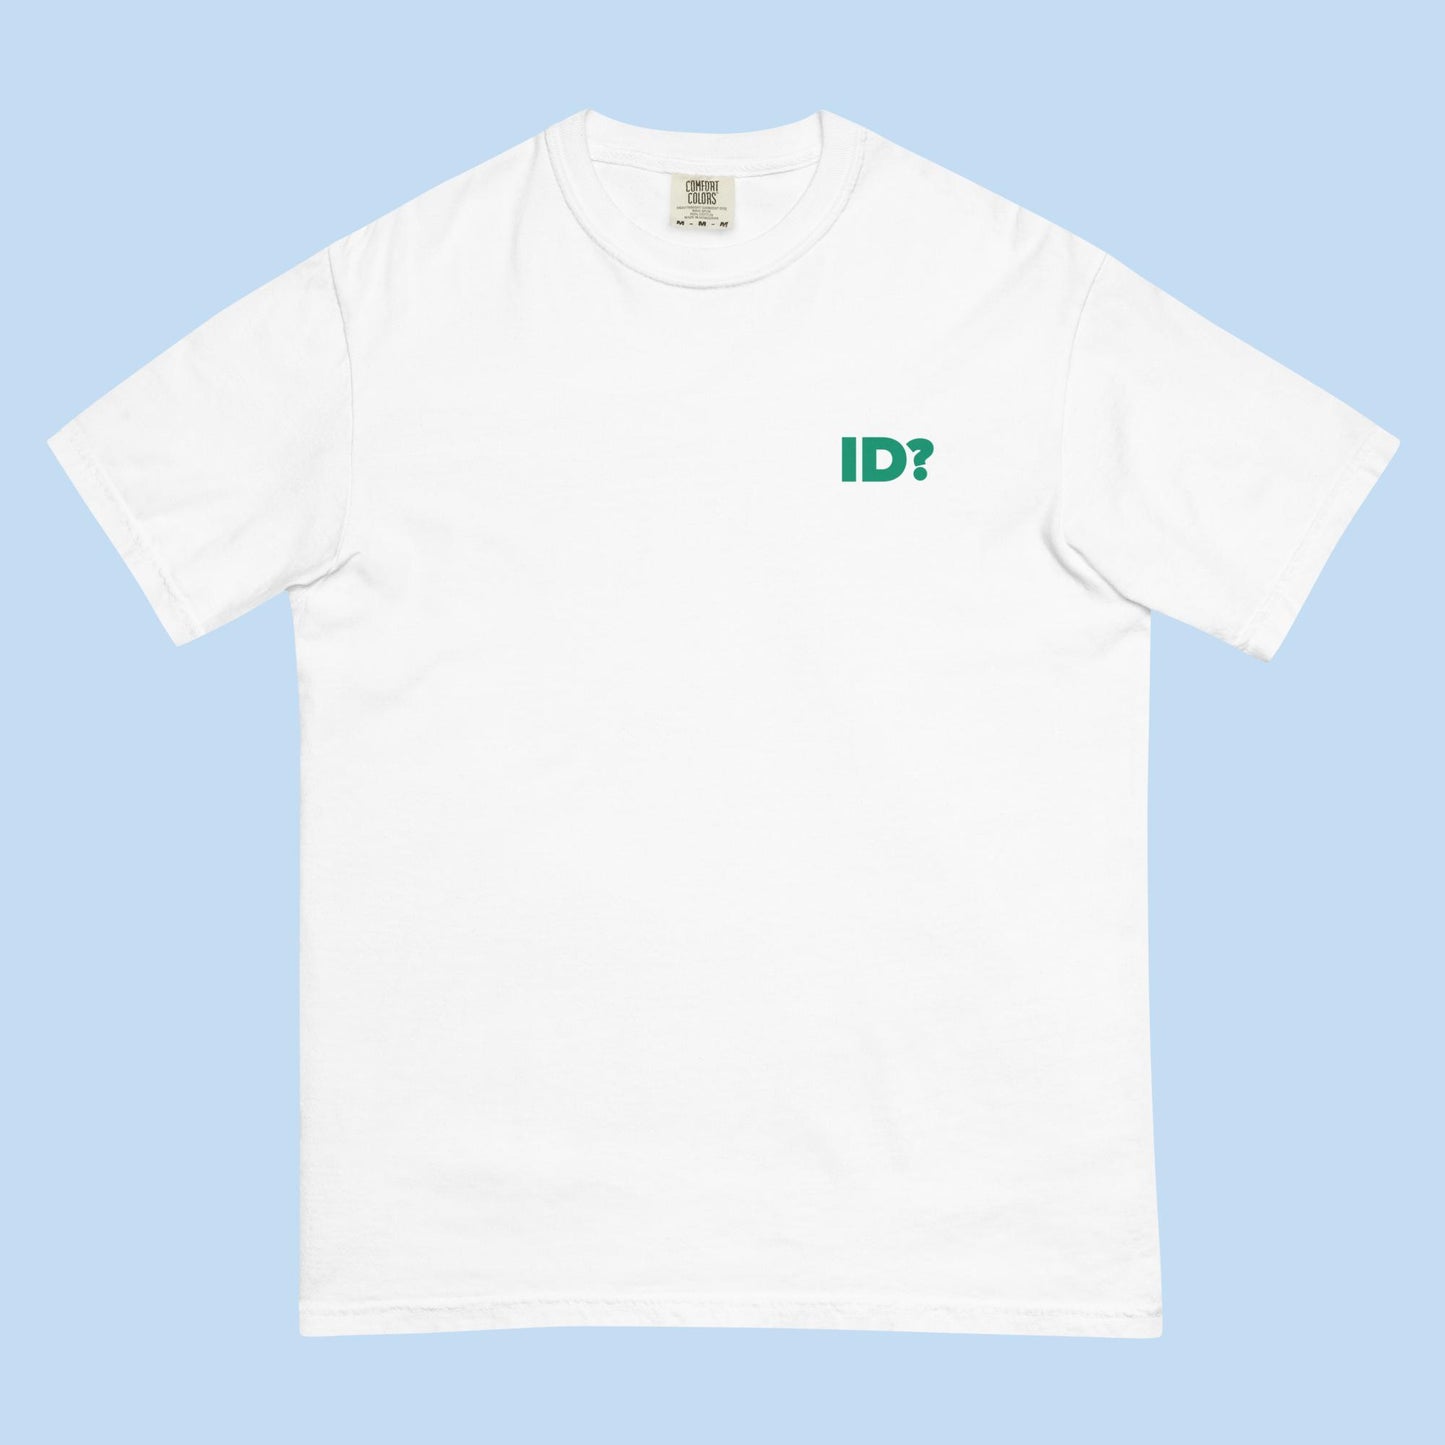 Track ID? Garment-Dyed Heavyweight T-Shirt